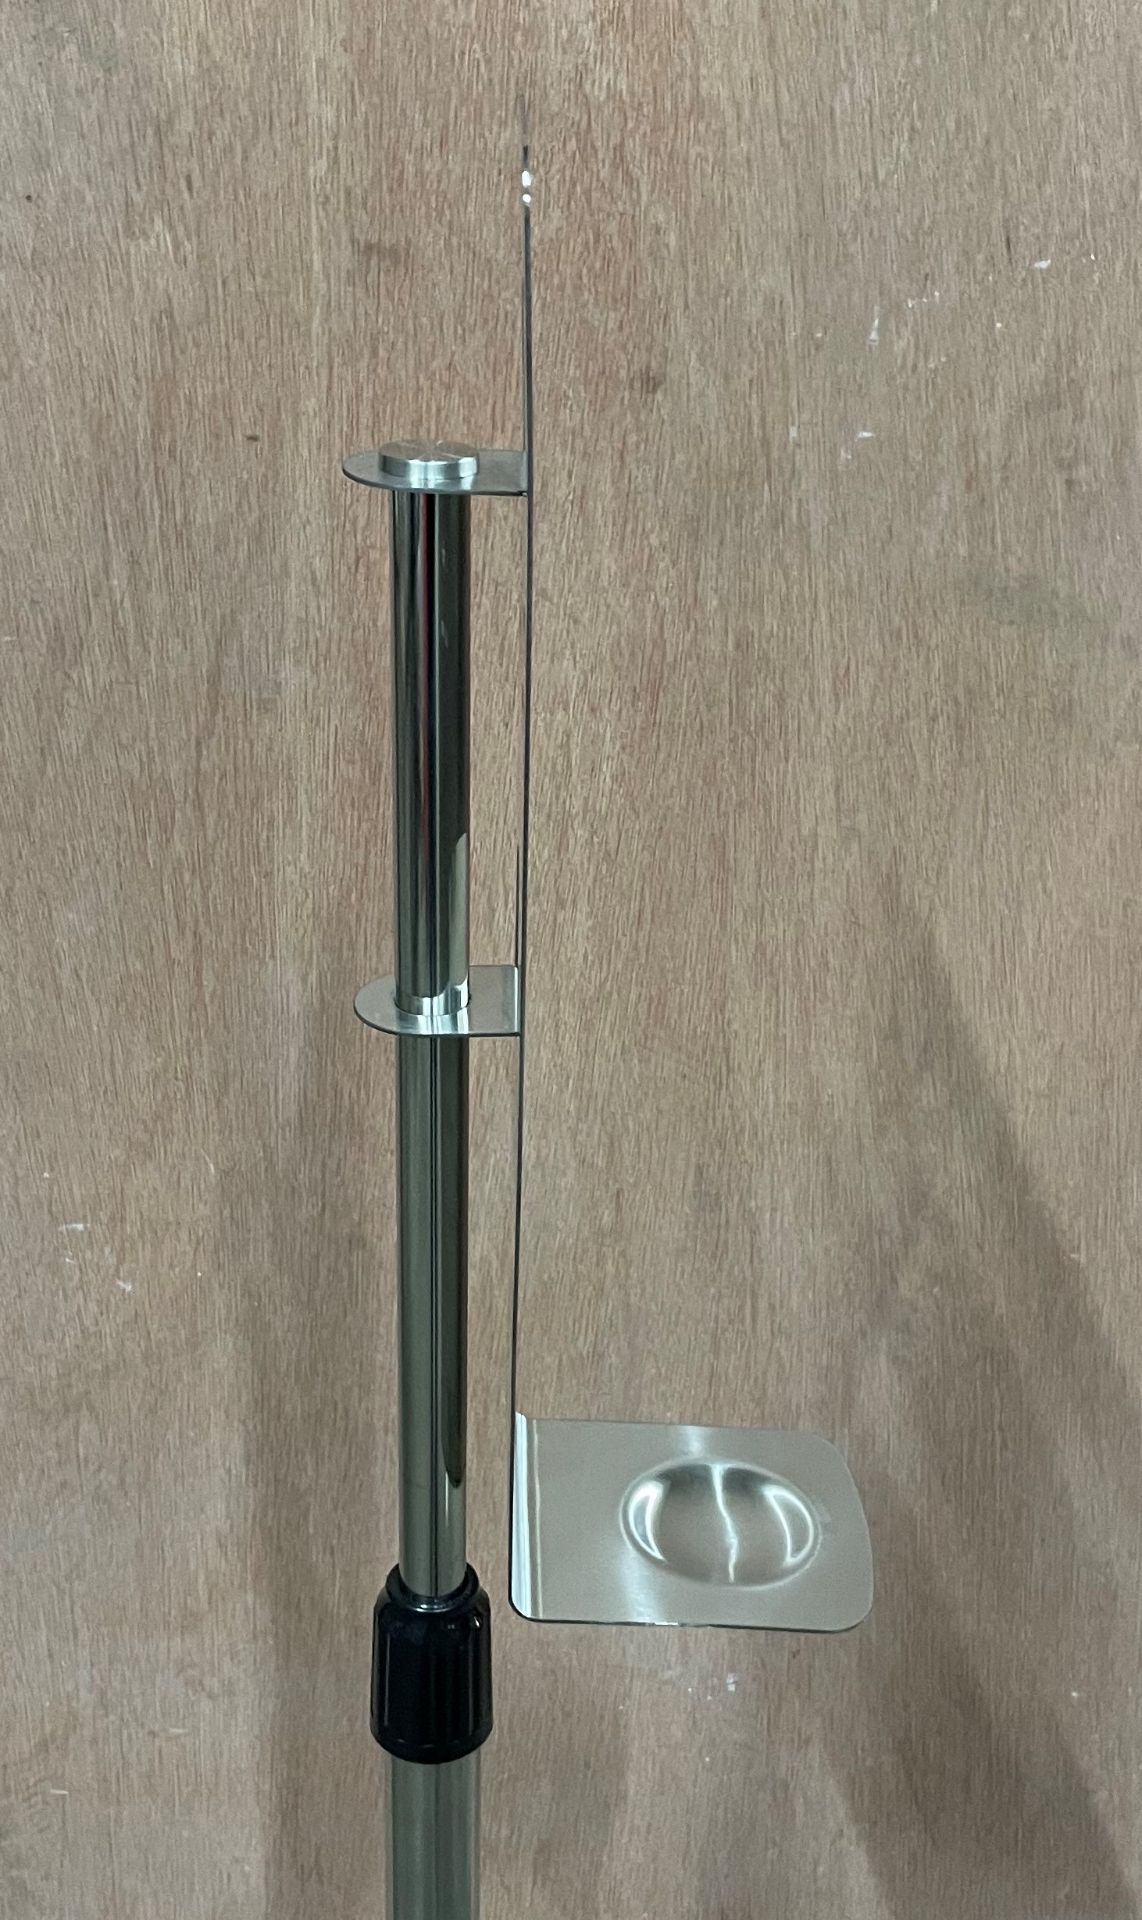 2x HCI Metal Sanitizer Stands | HCI Liquid Bottle Styled Soap Dispensers |HCI 2/4 Metal Bases - Image 5 of 16